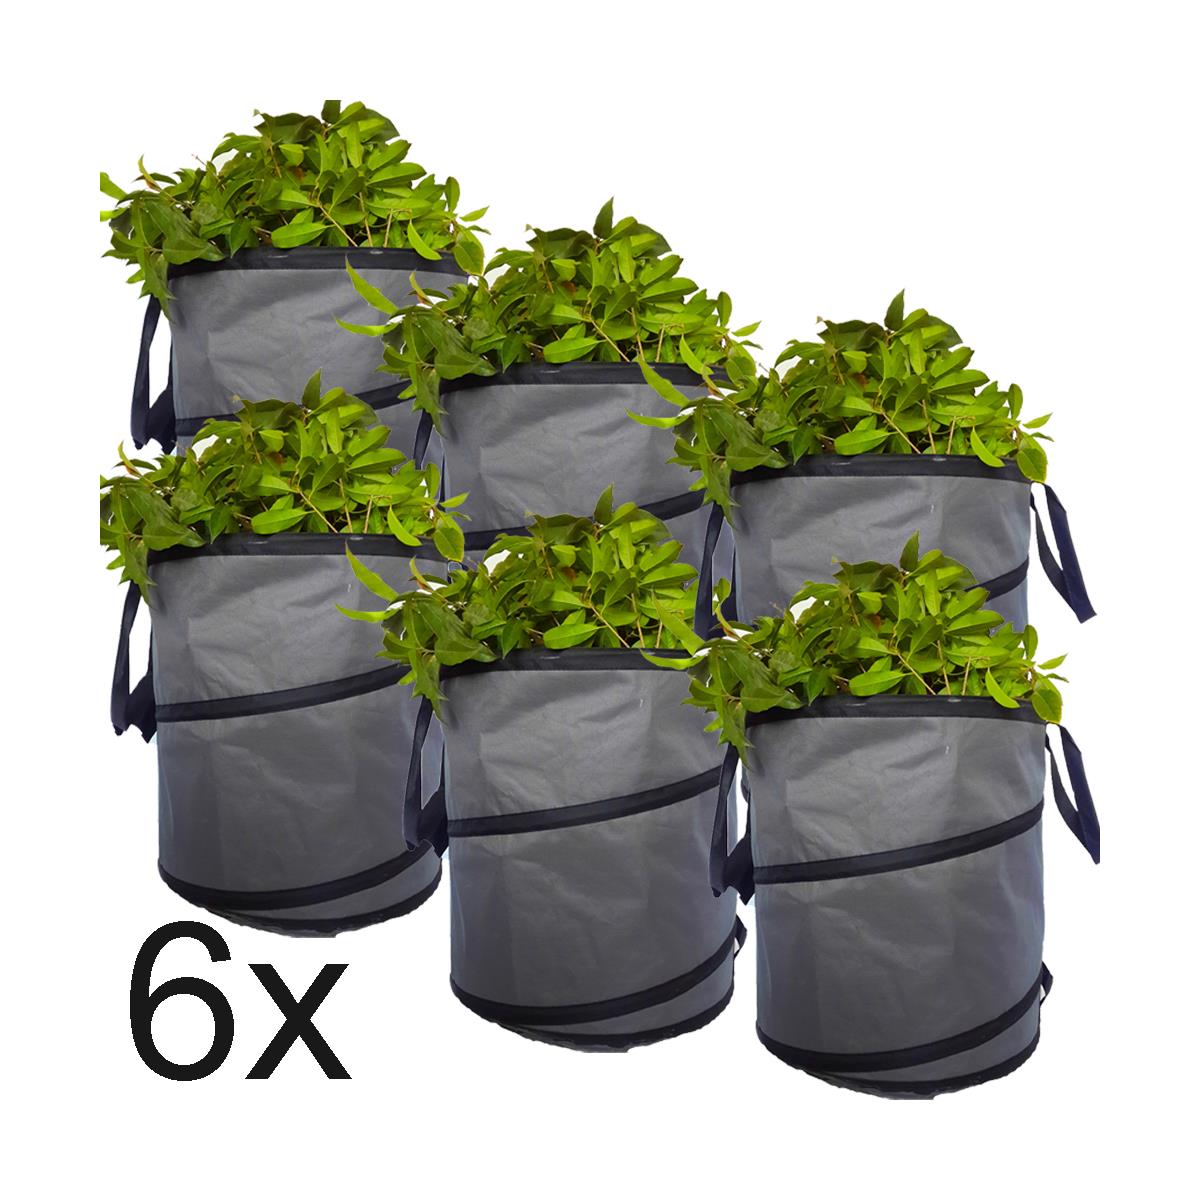 FUXTEC 100L garden waste bags / leaf bags - SET of 6 - FX-GB100